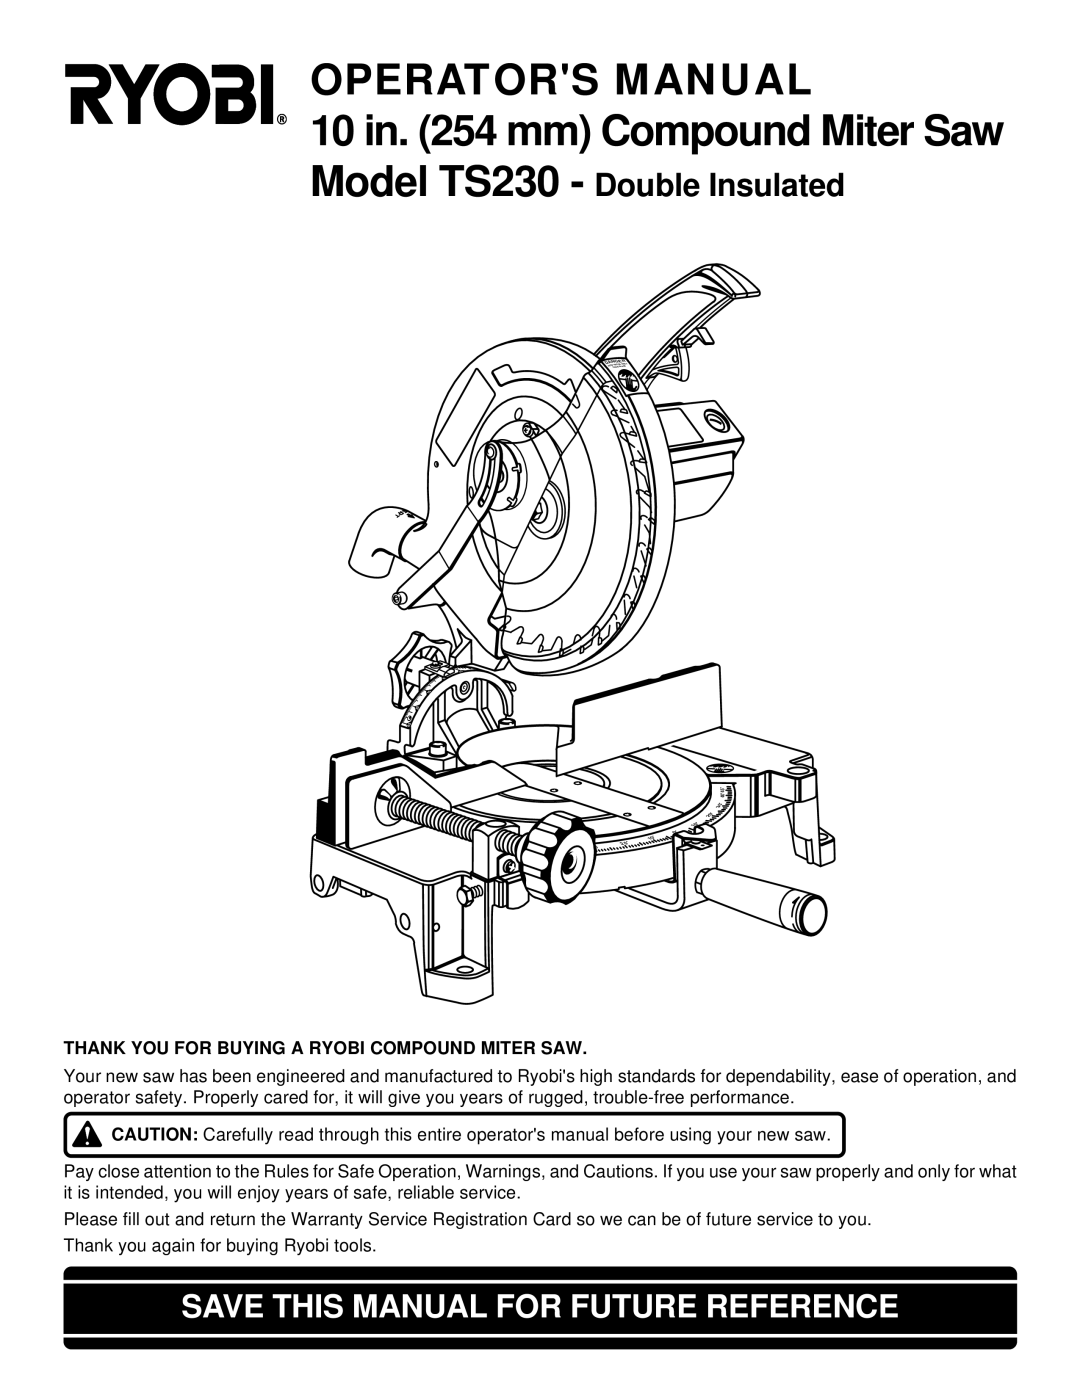 Ryobi TS230 warranty Operators Manual, Thank YOU for Buying a Ryobi Compound Miter SAW 